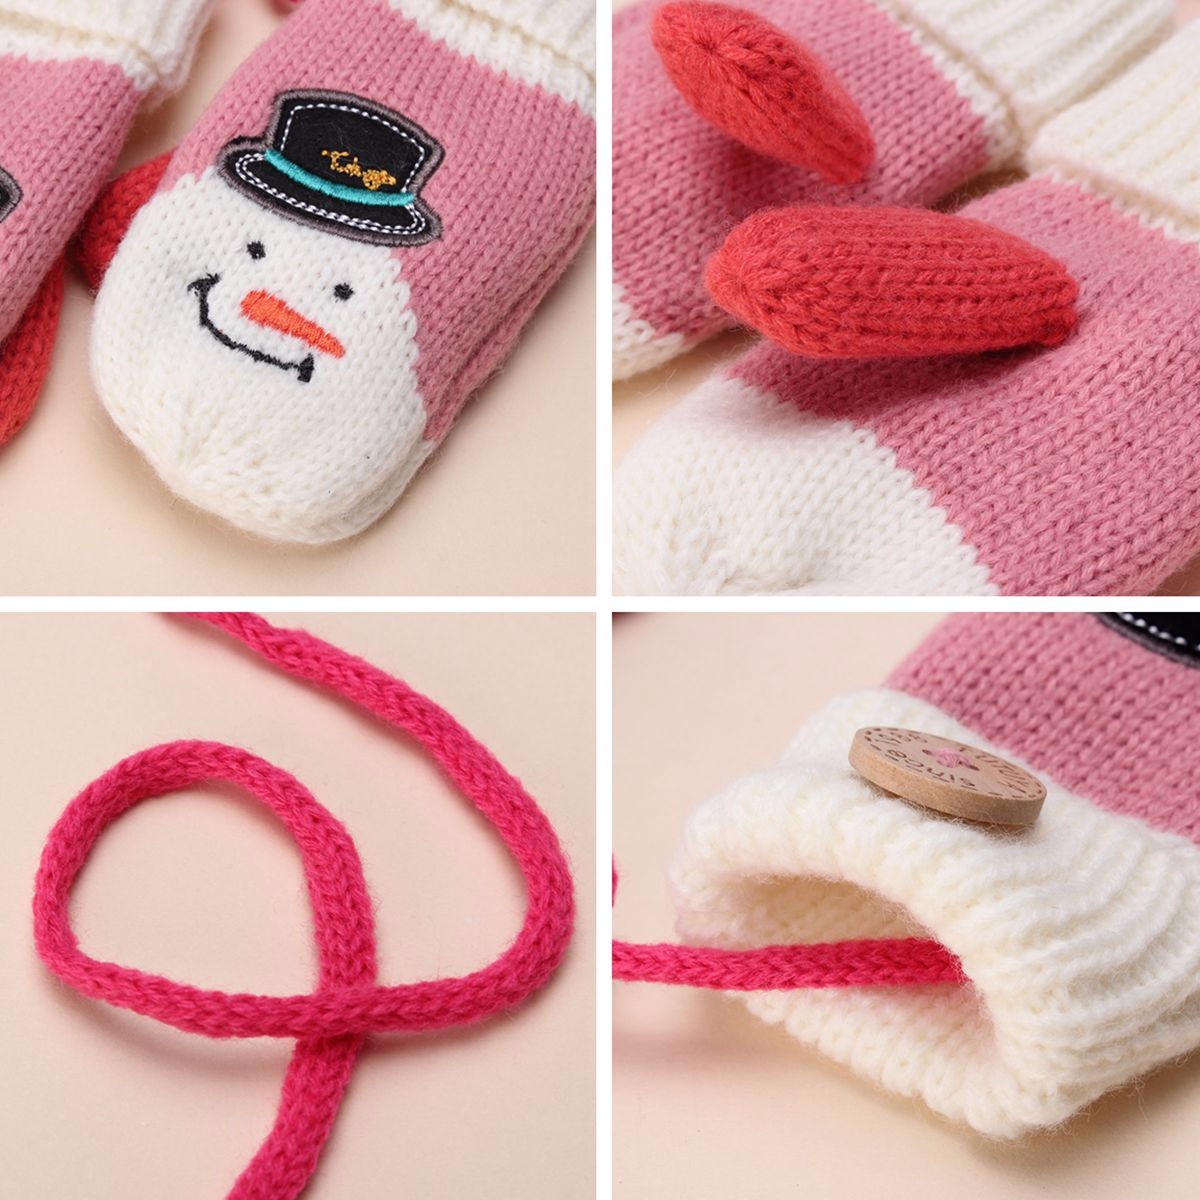 Christmas-Winter-Kids-Girl-Baby-Knitted-Warm-Mittens-Xmas-Ski-Gloves-Xmas-Gift-1019465